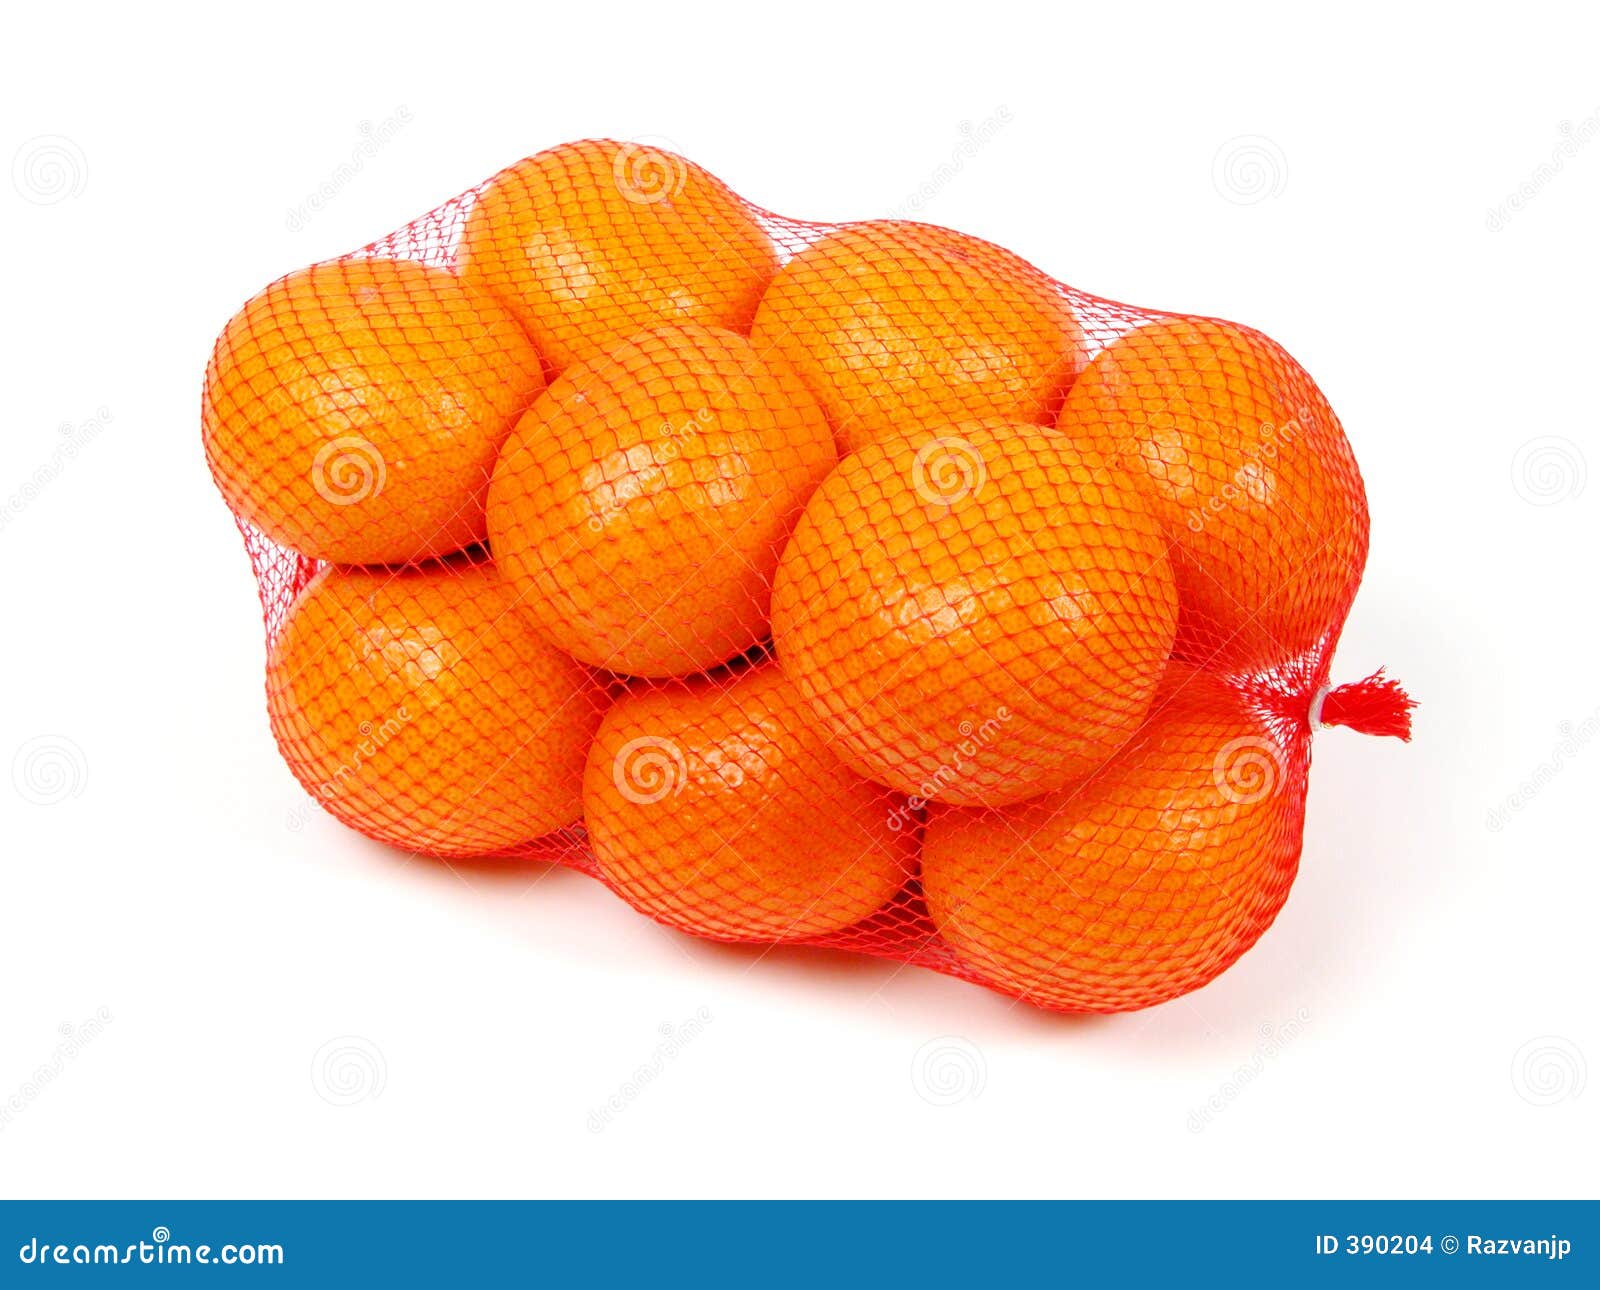 oranges in net